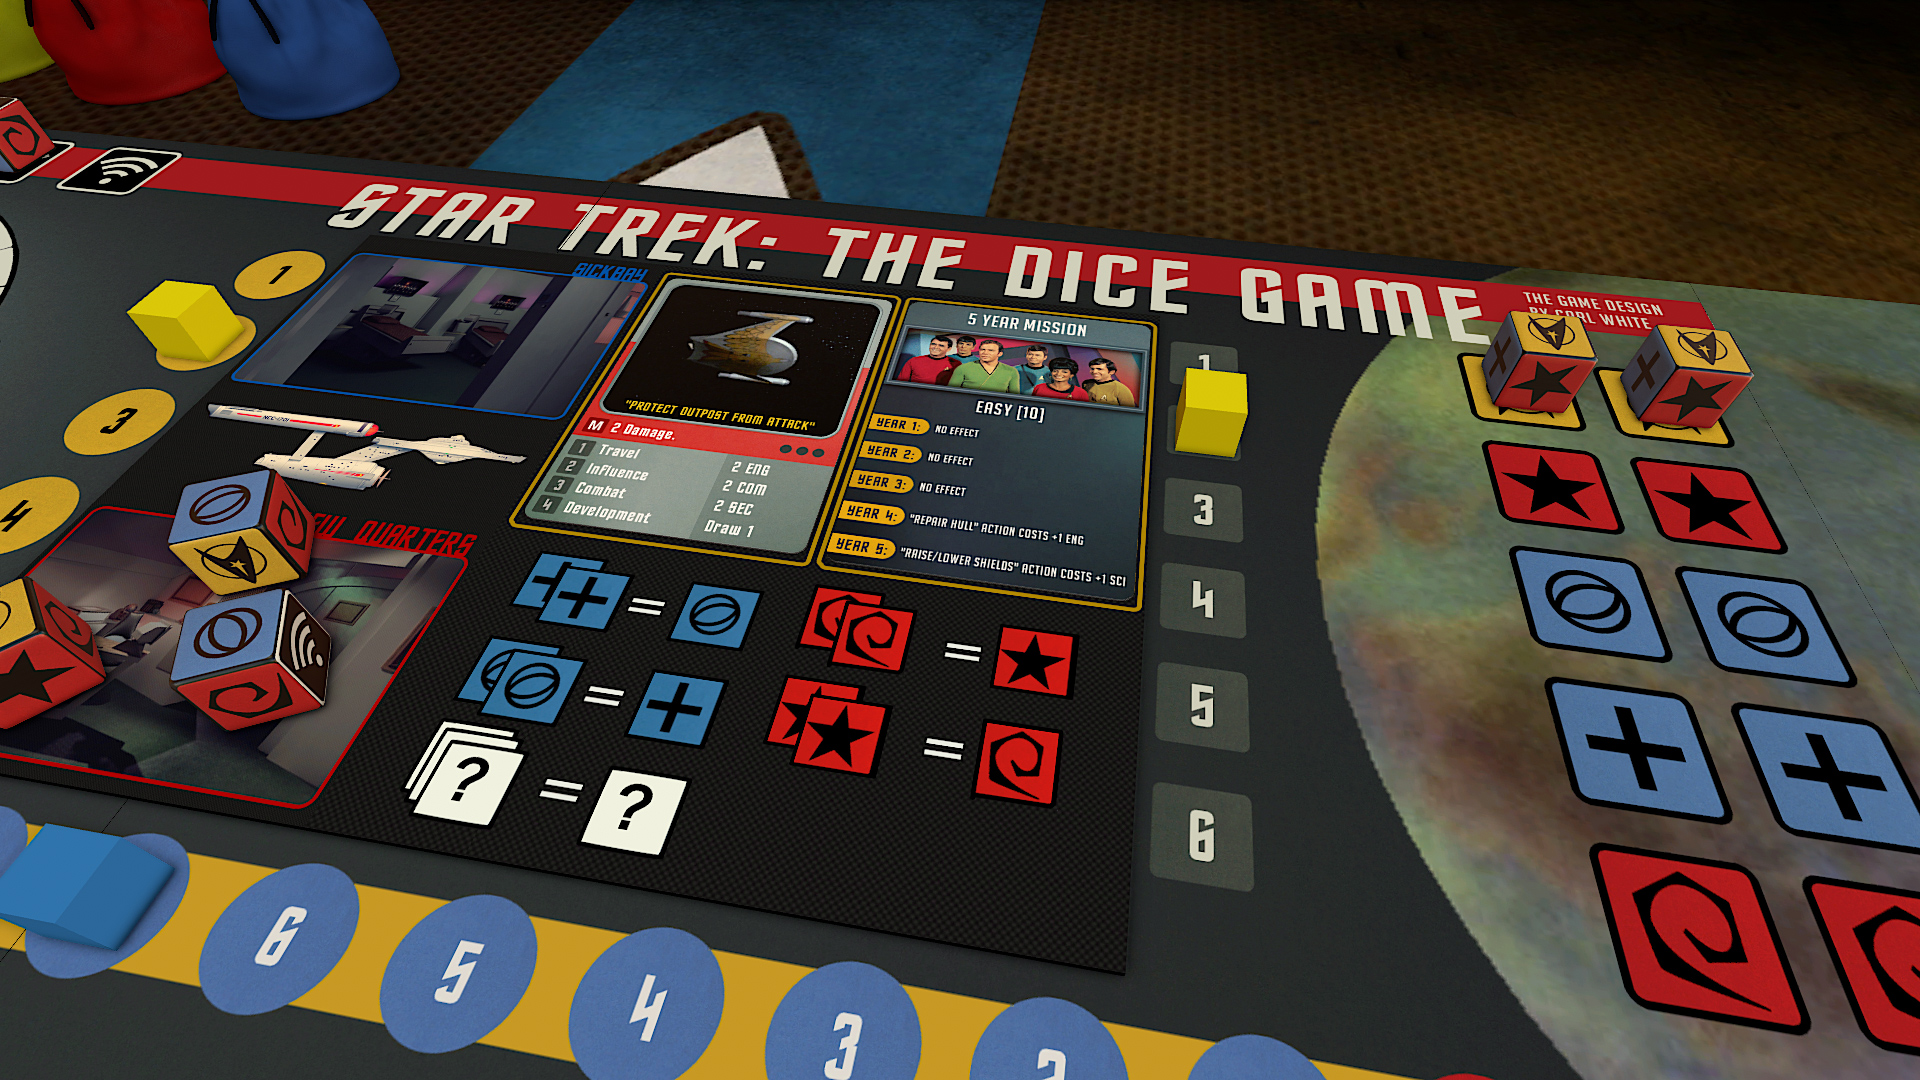 Star Trek: The Dice Game